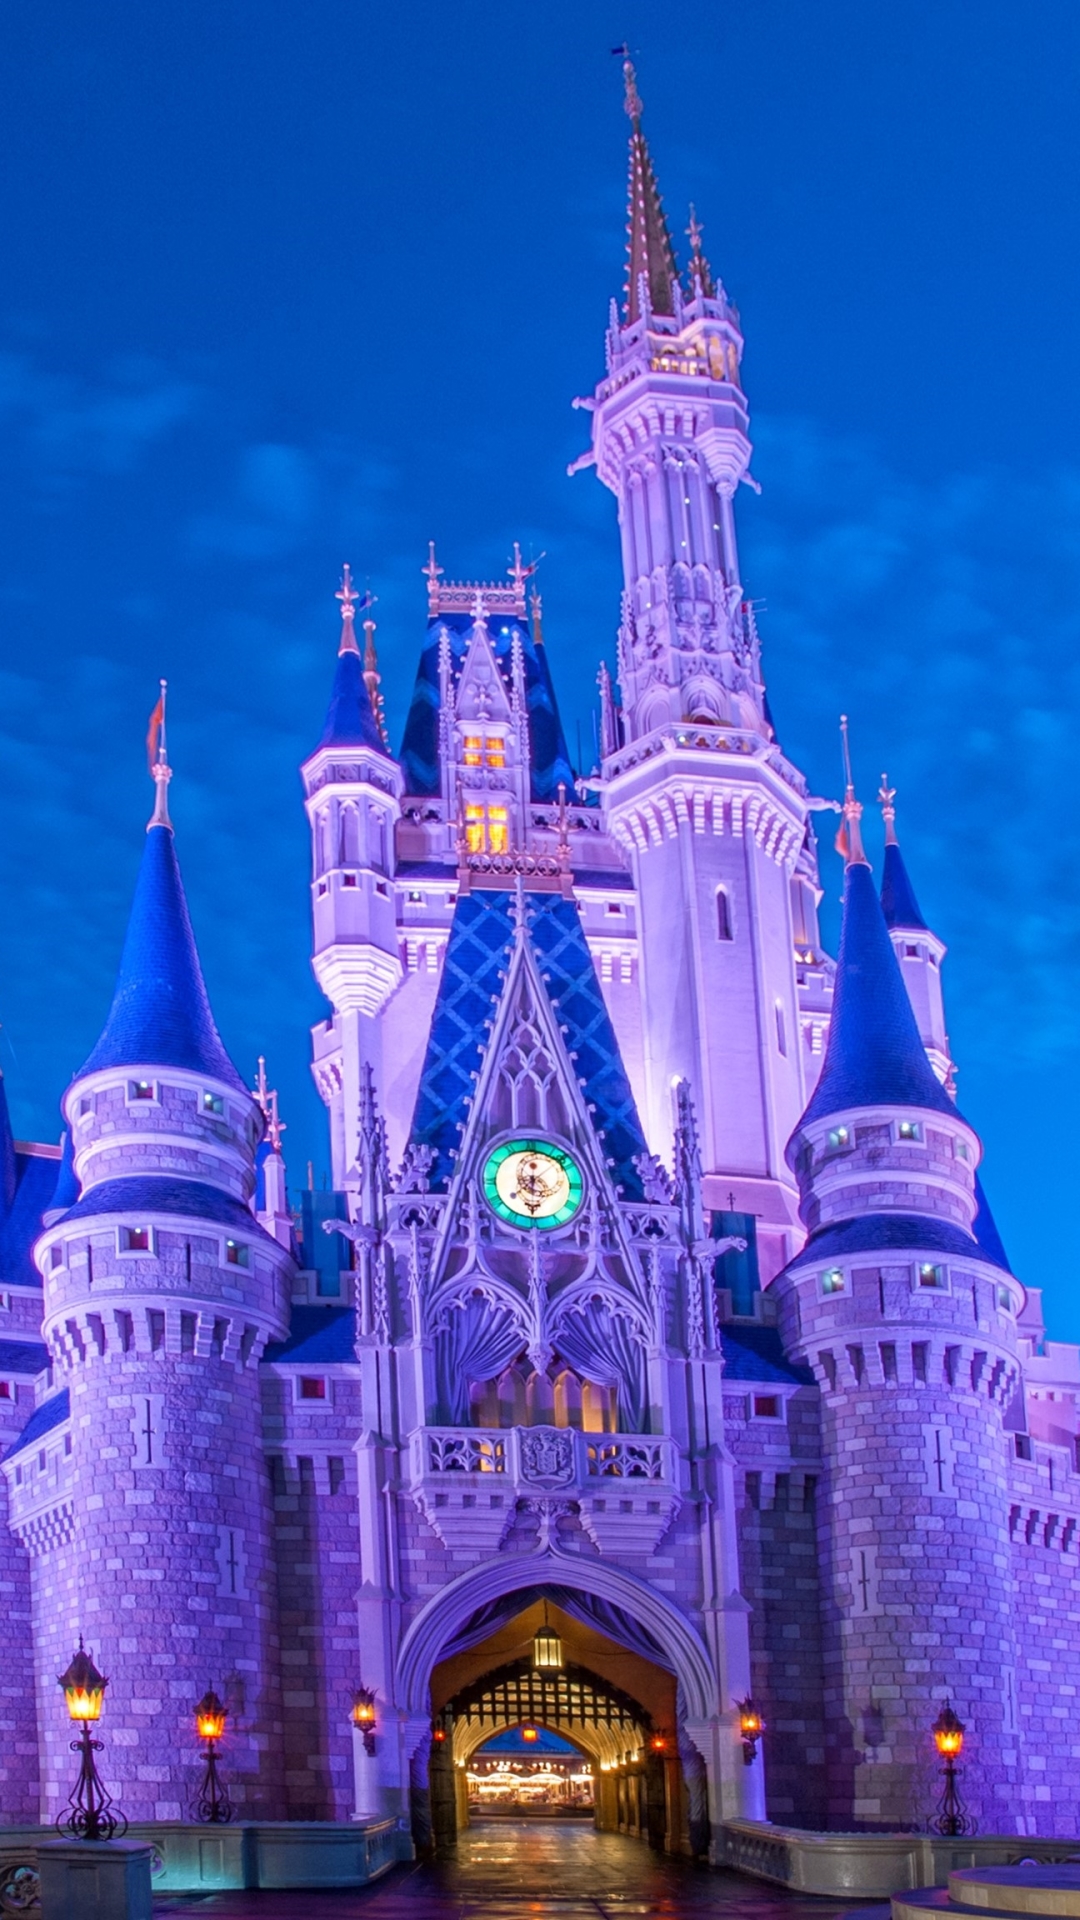 Cinderella Castle at Disney World in Florida